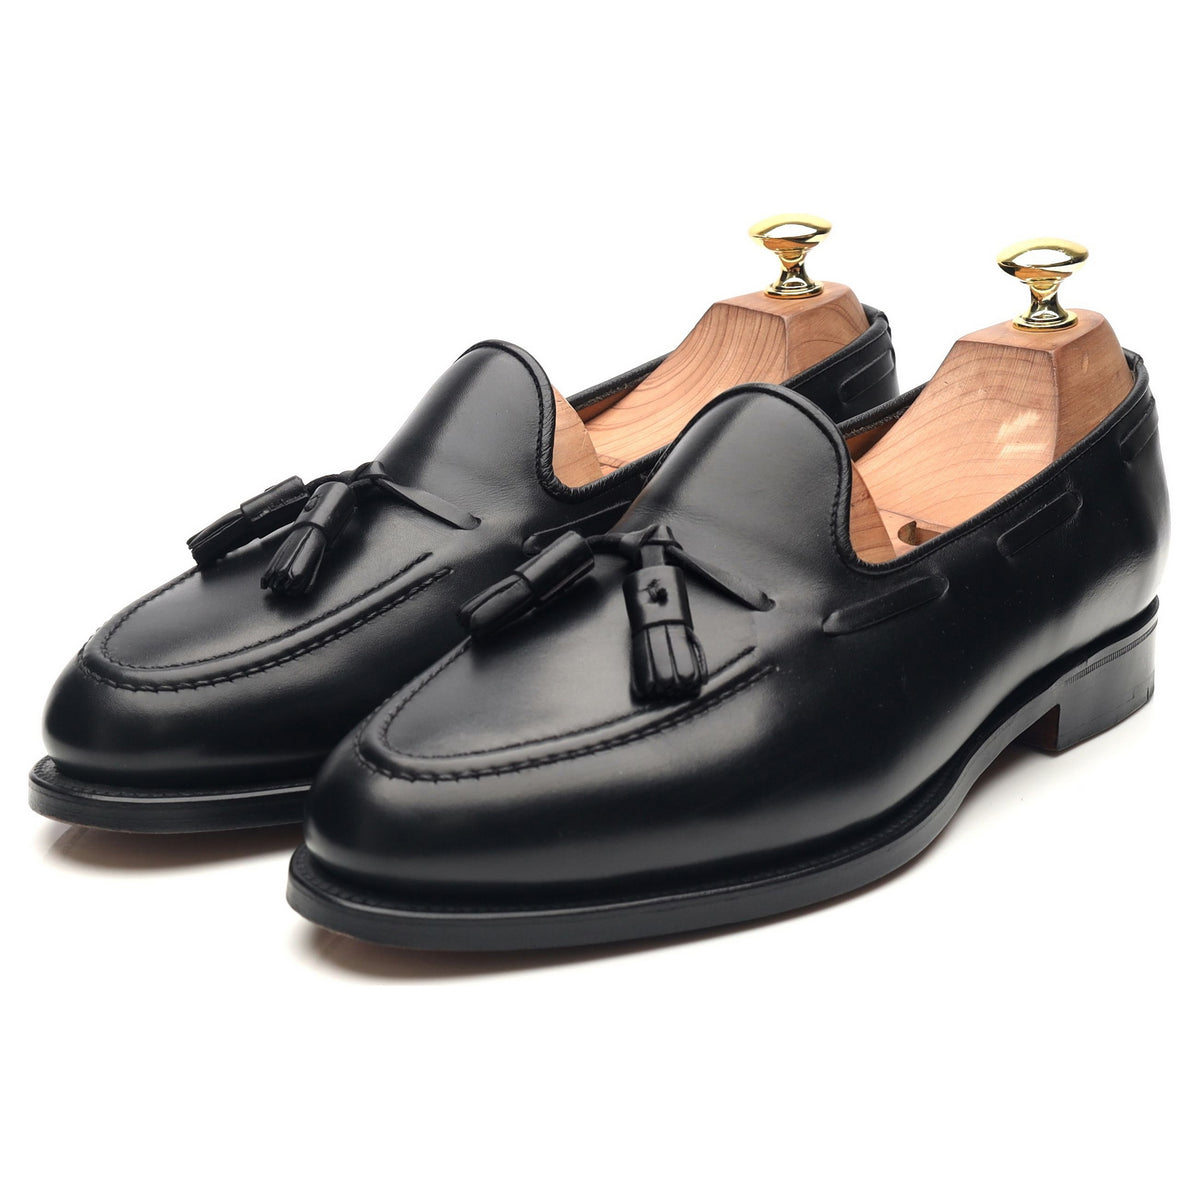 Black Leather Tassel Loafers UK 8